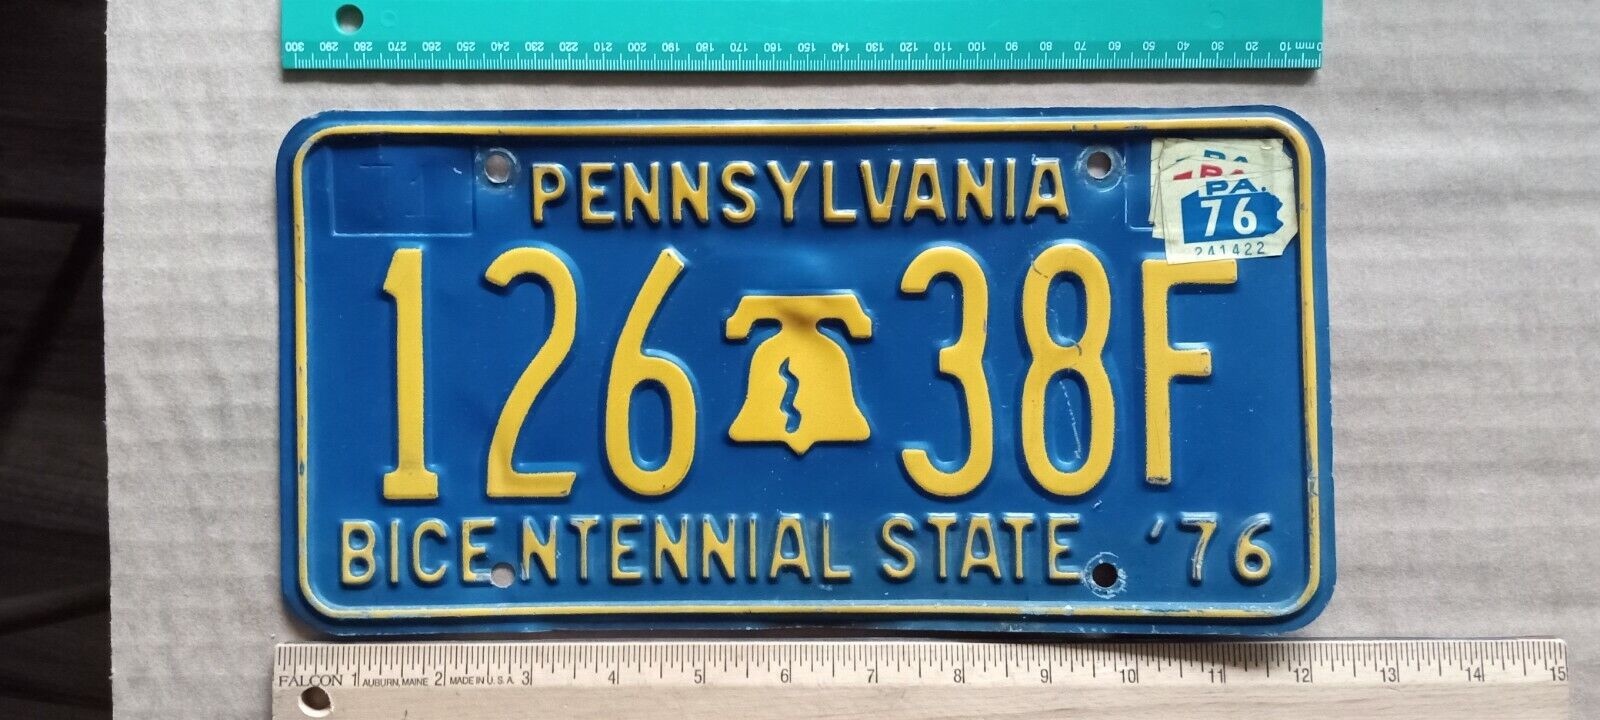 License Plate, Pennsylvania, 1976 Bicentennial, 126 cracked Liberty Bell 38F